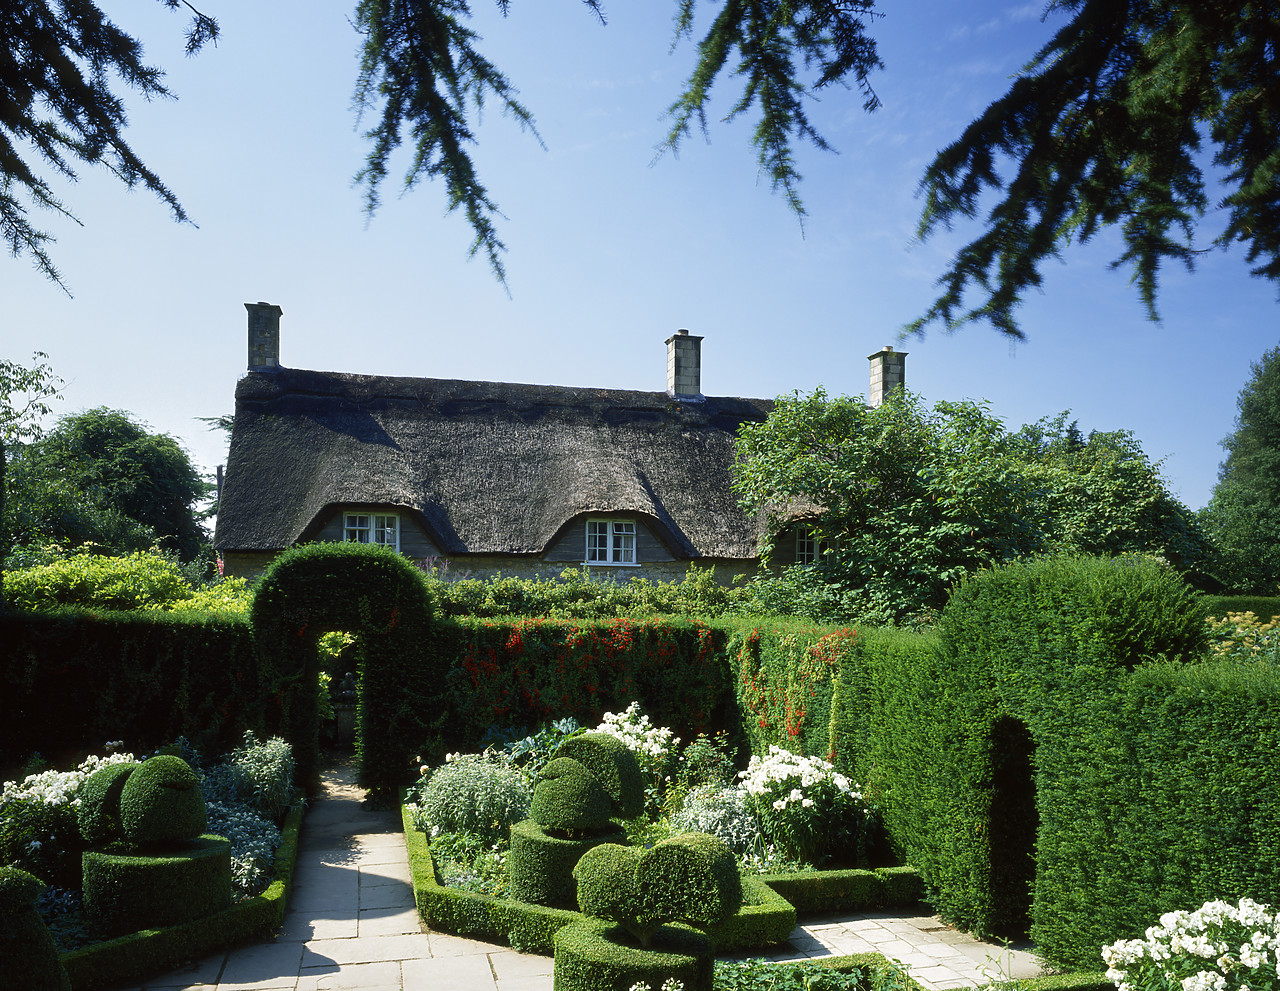 #881529-1 - The White Garden, Hidcote Manor Gardens, Gloucestershire, England